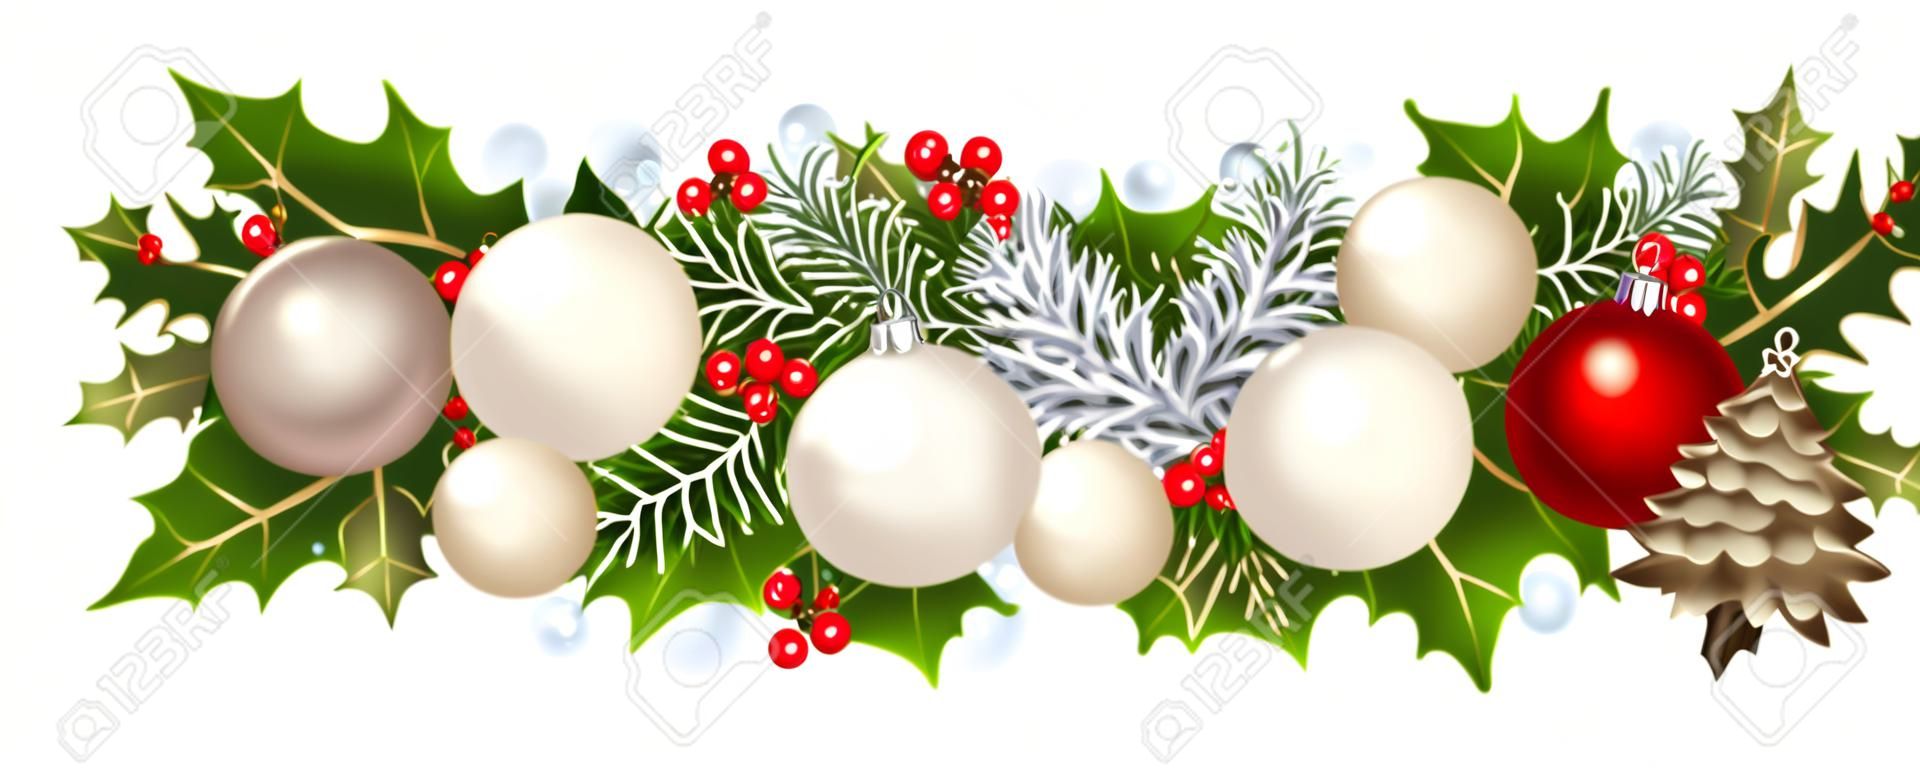 Noël horizontal de fond sans soudure. Vector illustration.